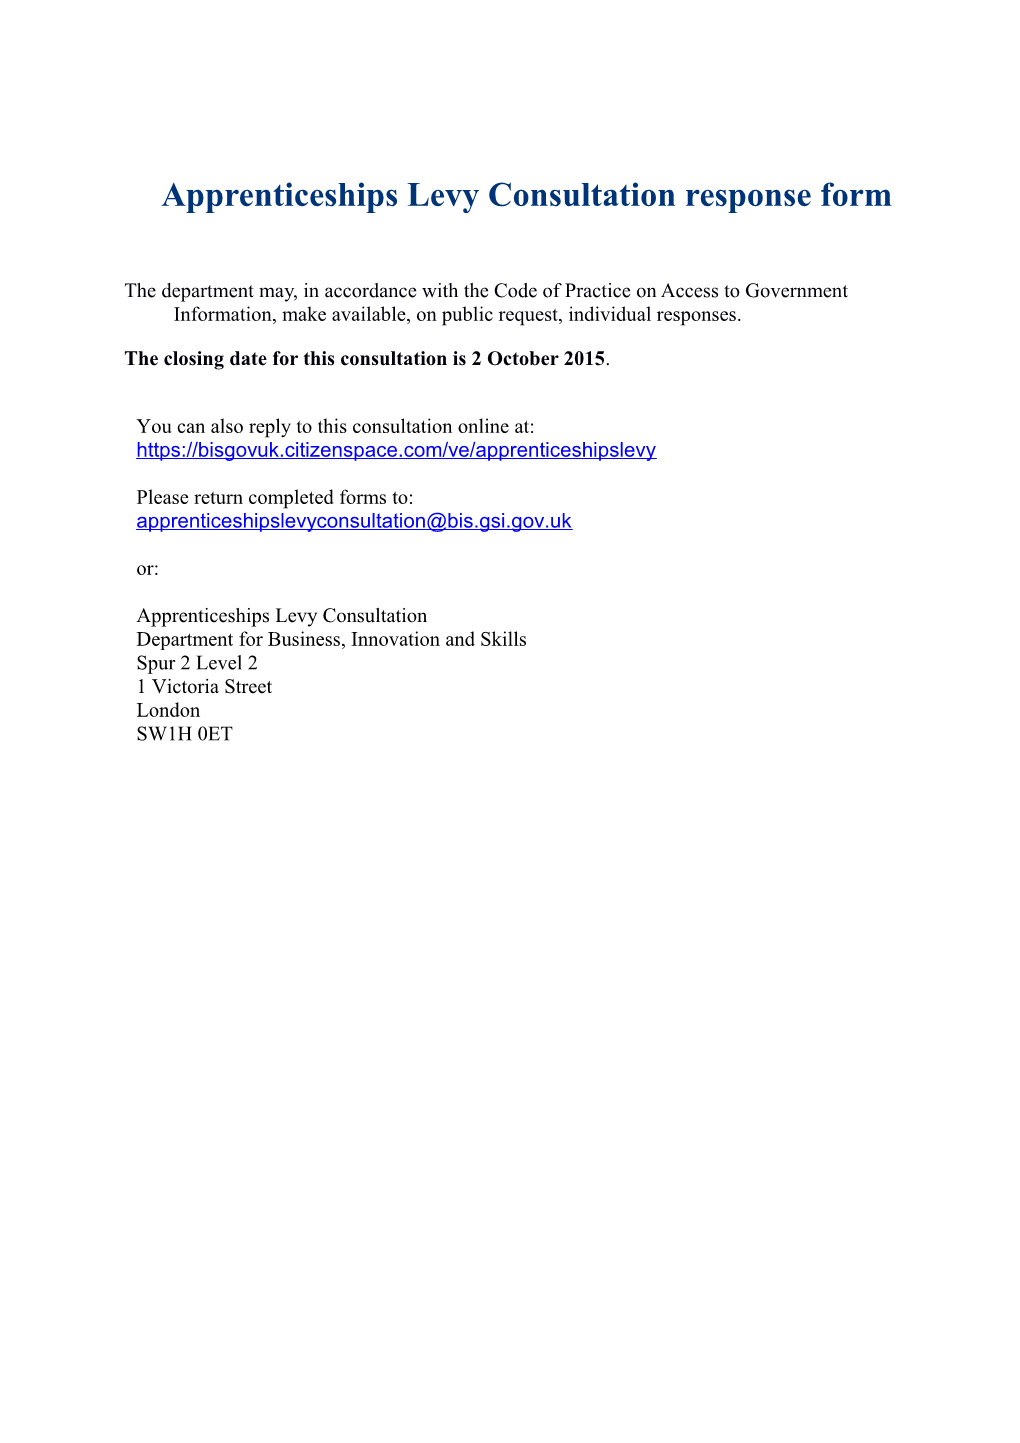 Apprenticeships Levy Consultation Response Form